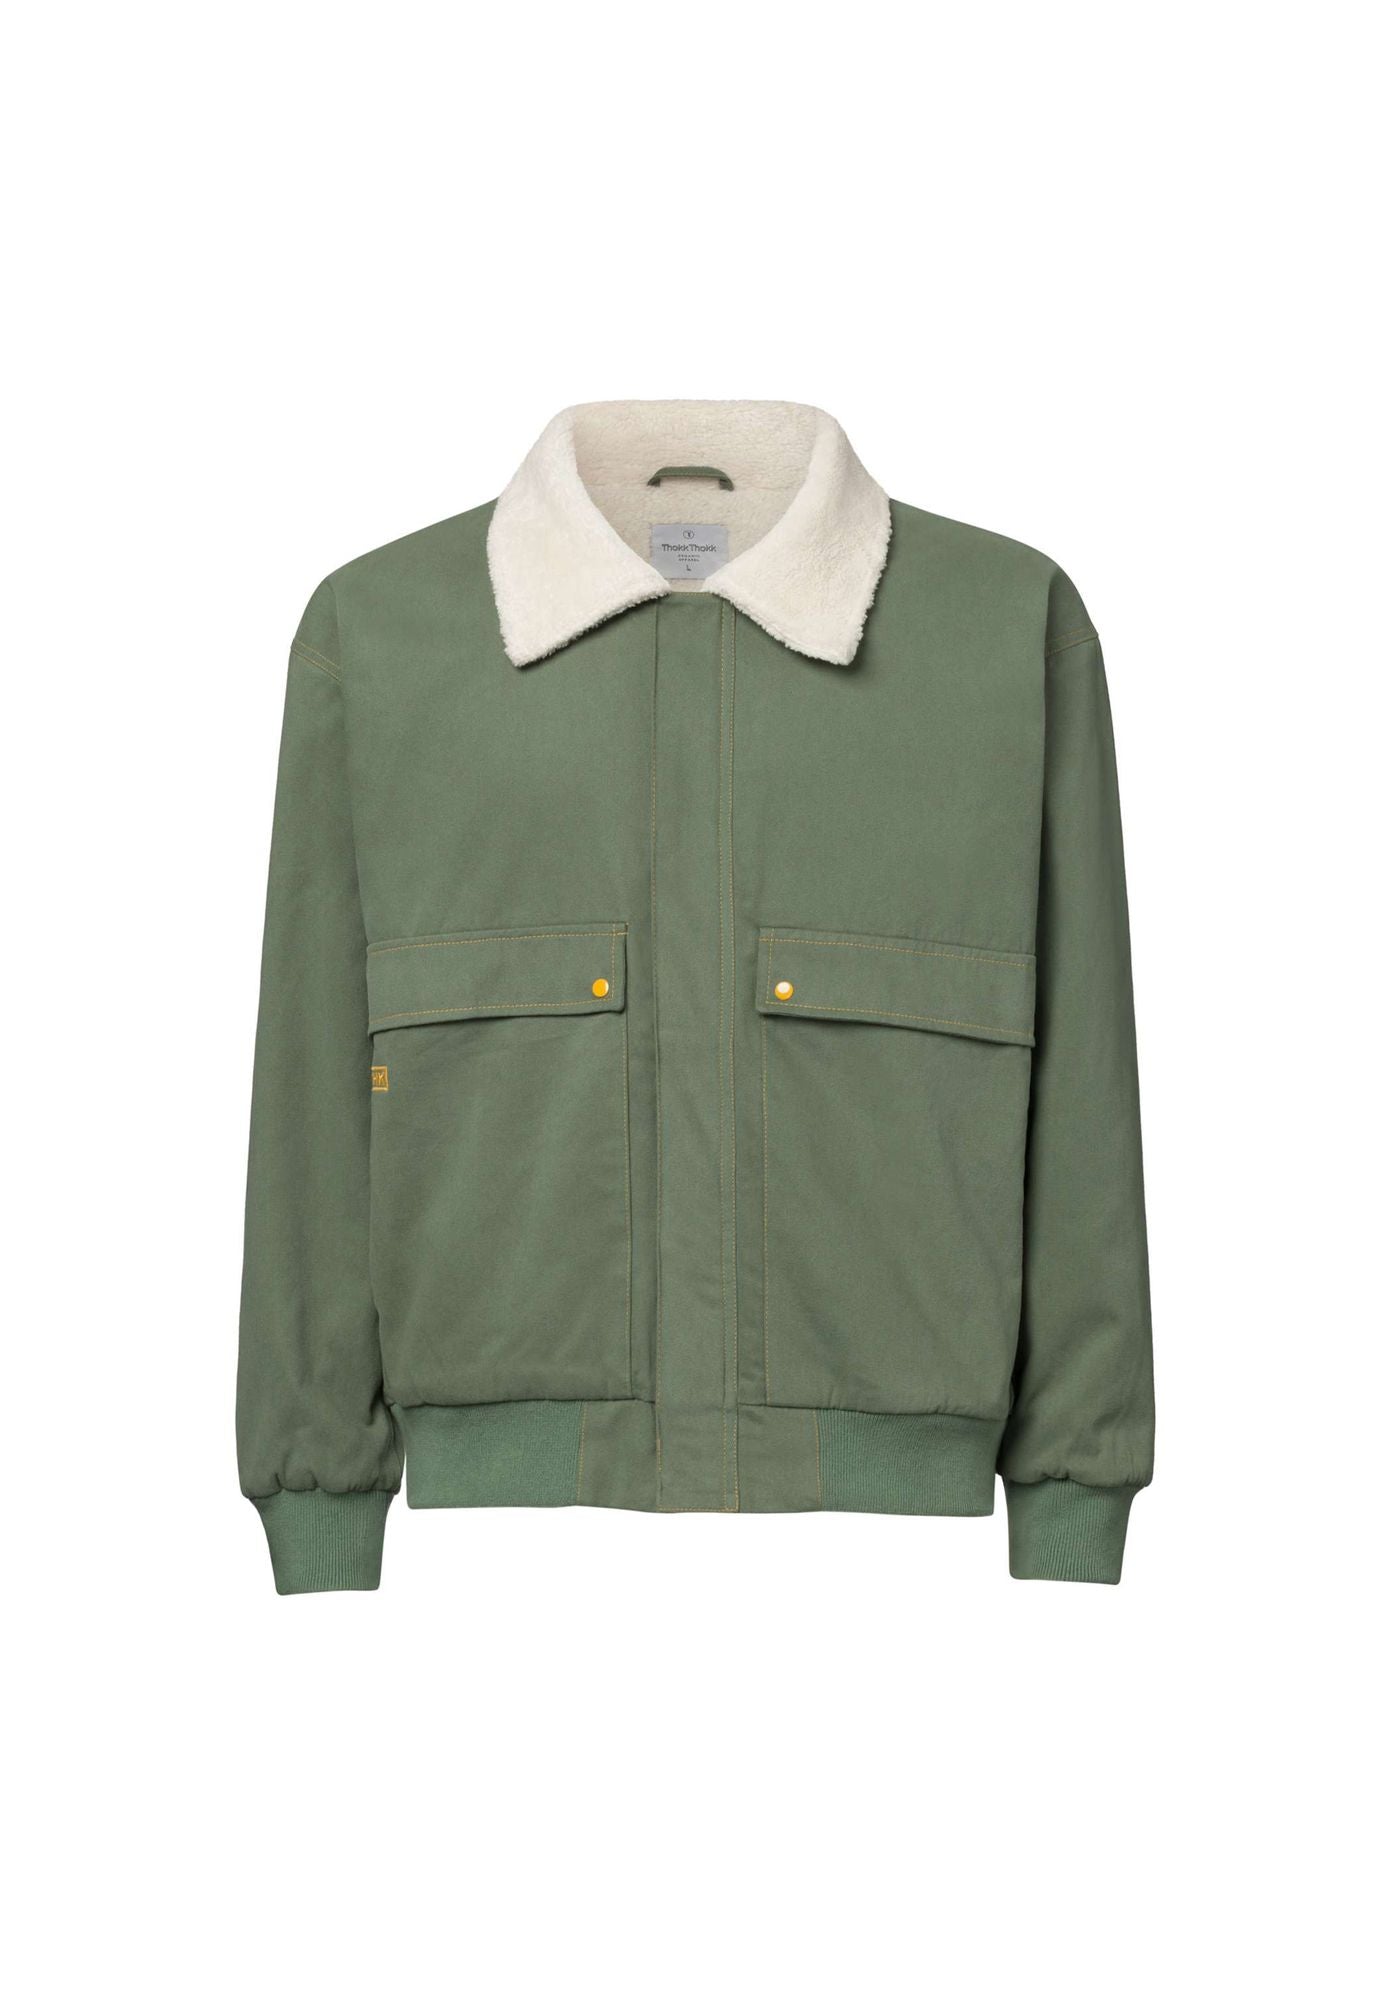 Green jacket TT2022 made of organic cotton from Thokkthokk